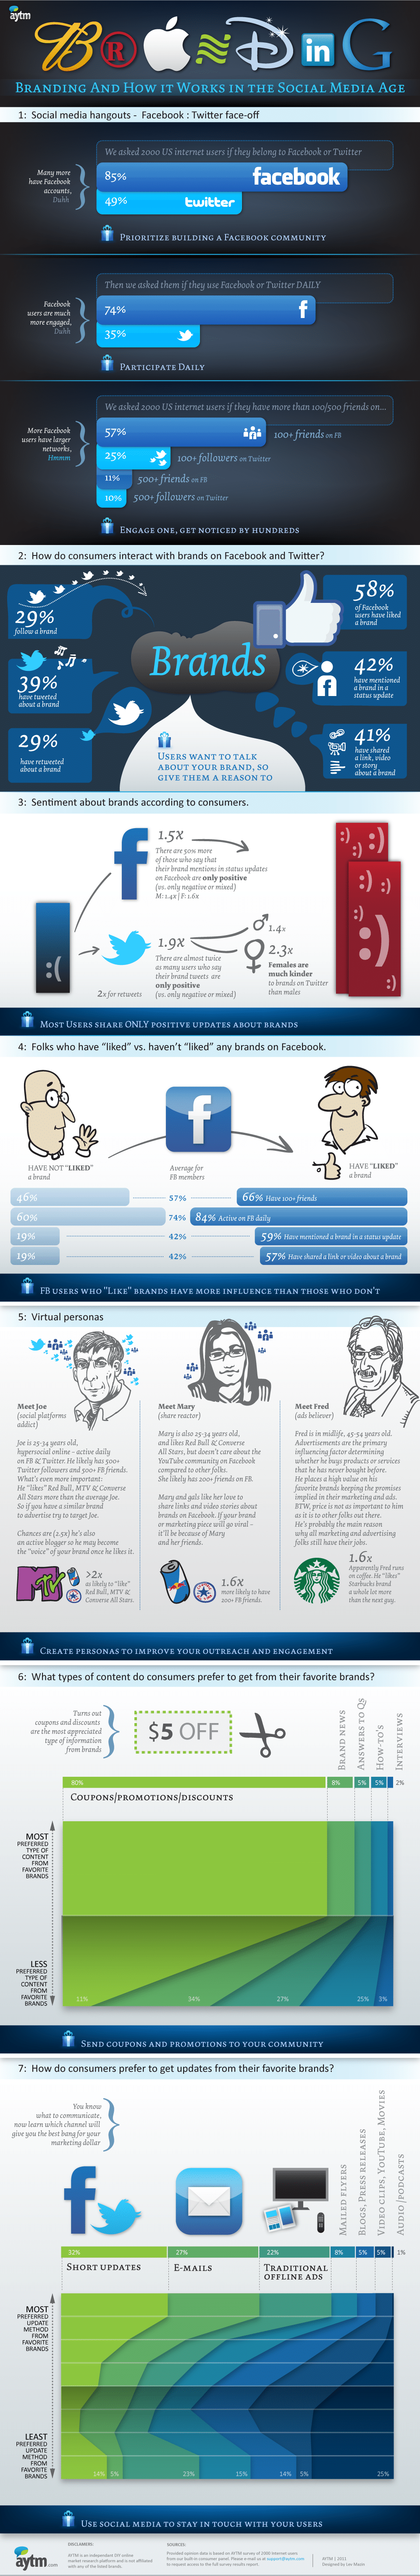 Branding and social media infographics